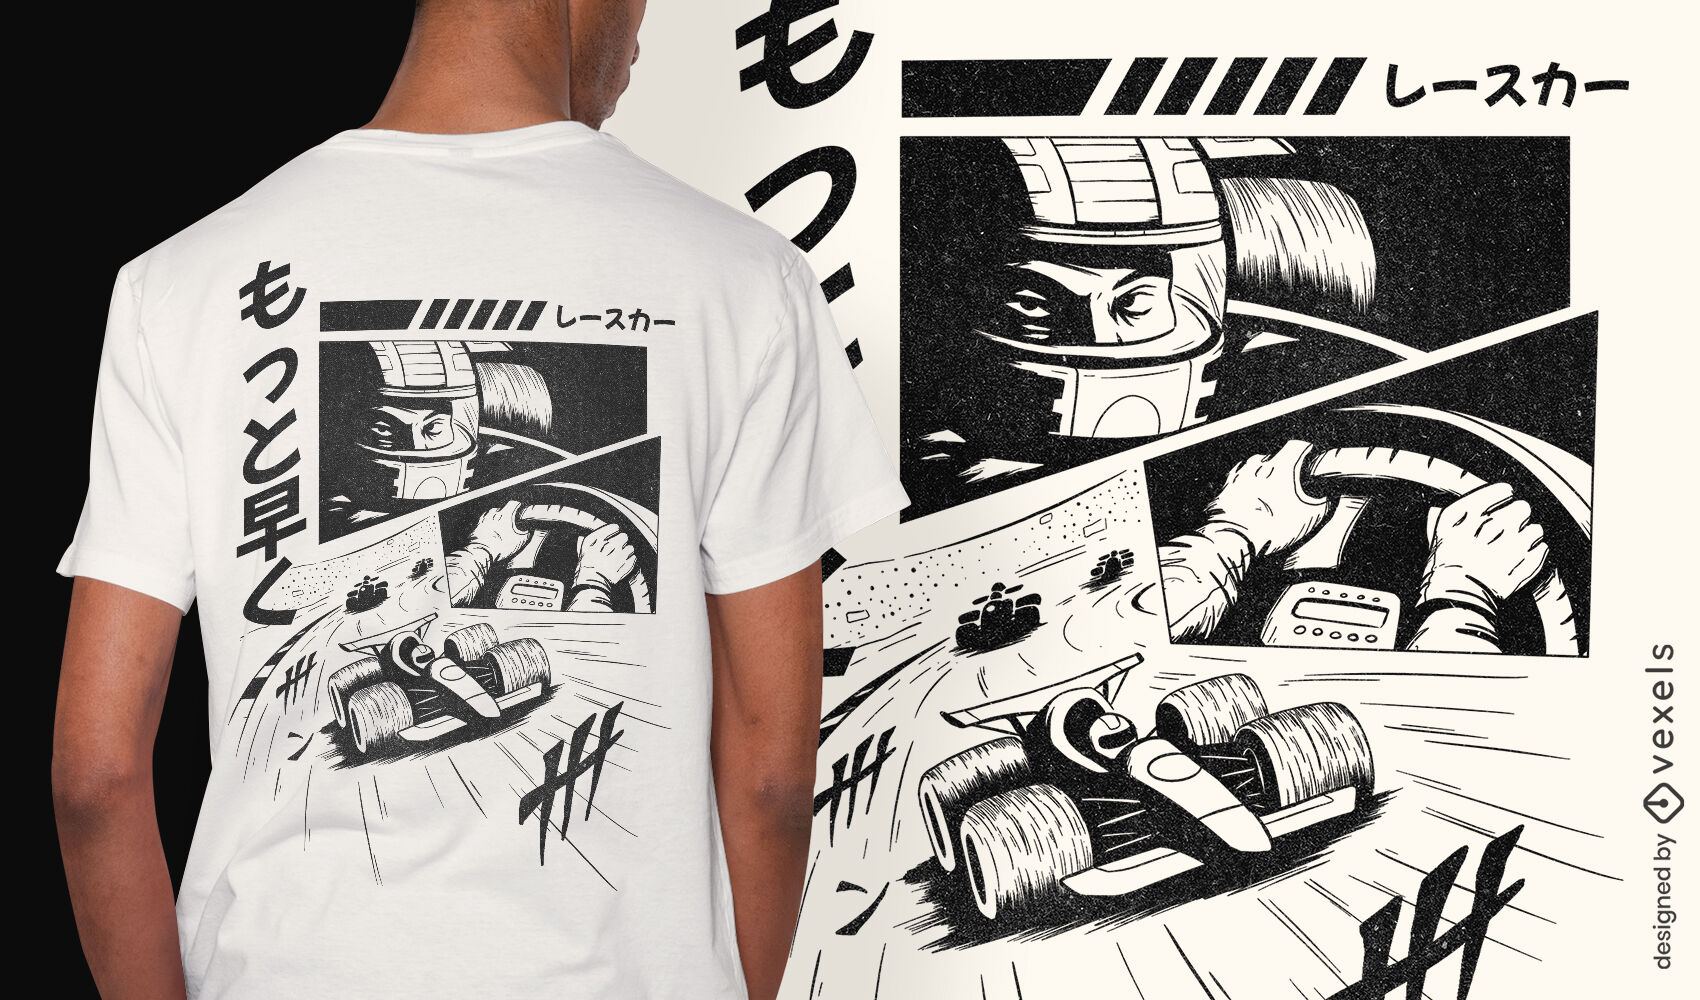 Anime race car comic book t-shirt psd